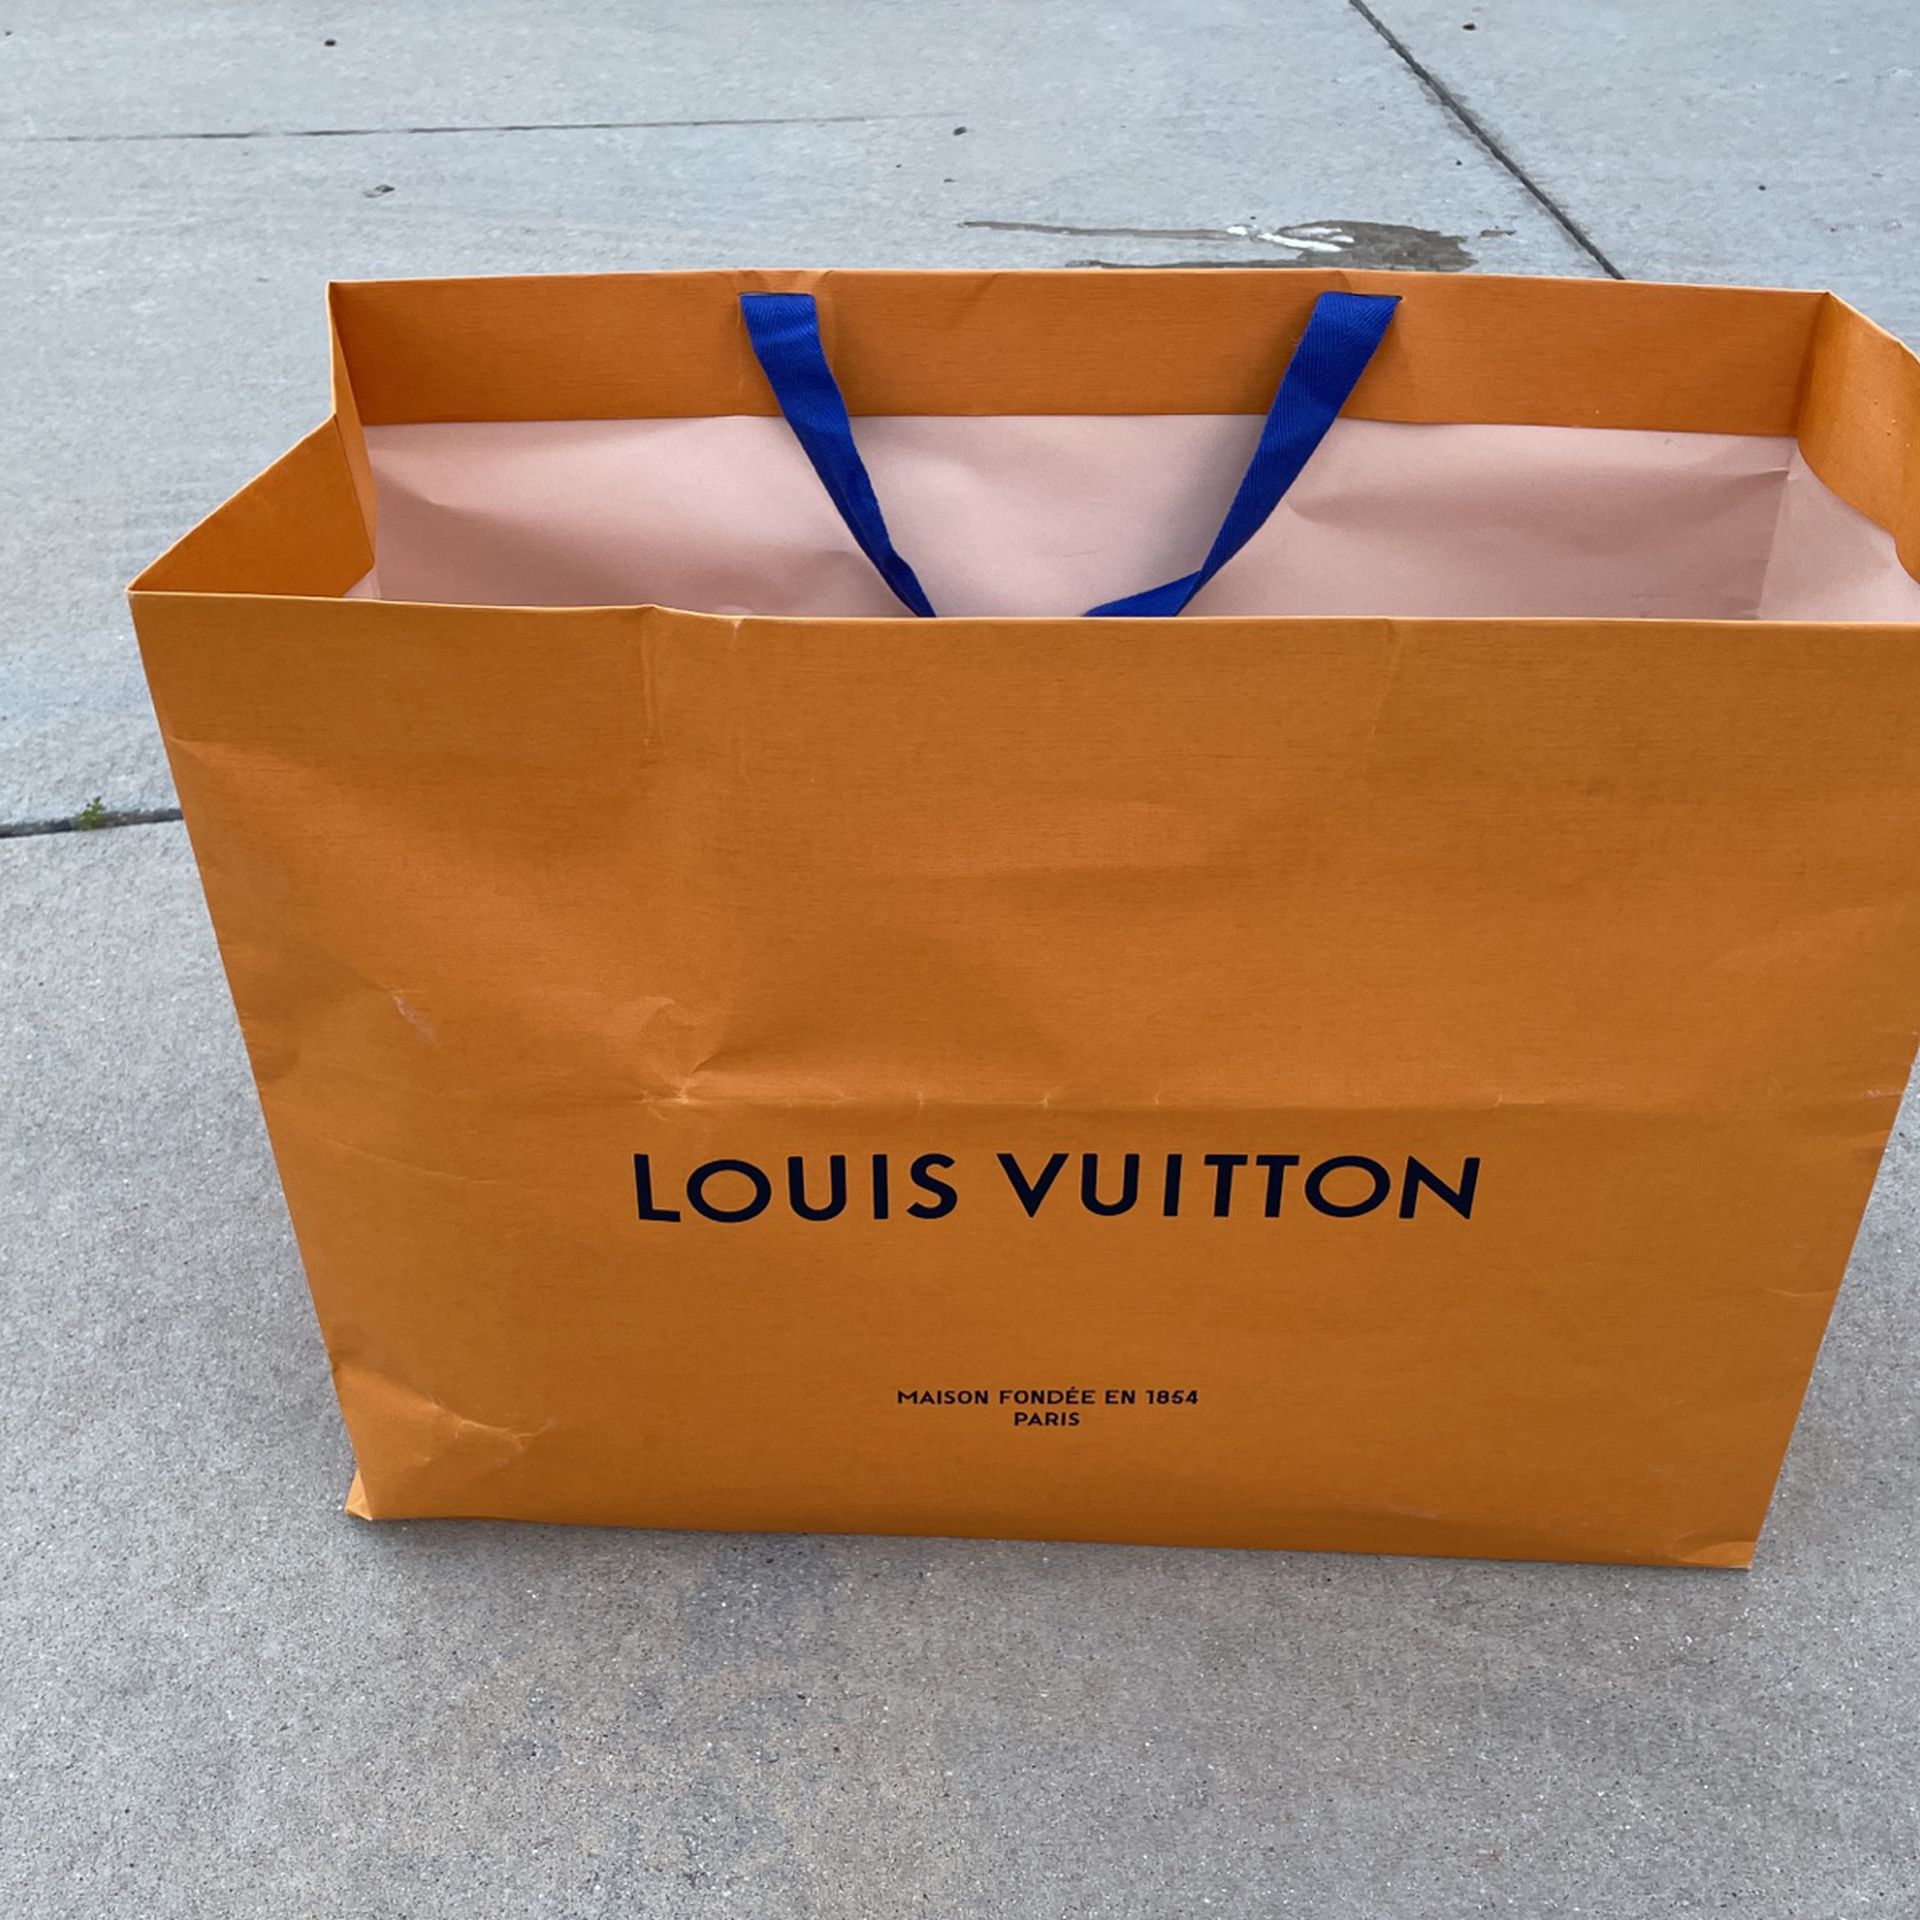 Louis Vuitton Shopping Bag